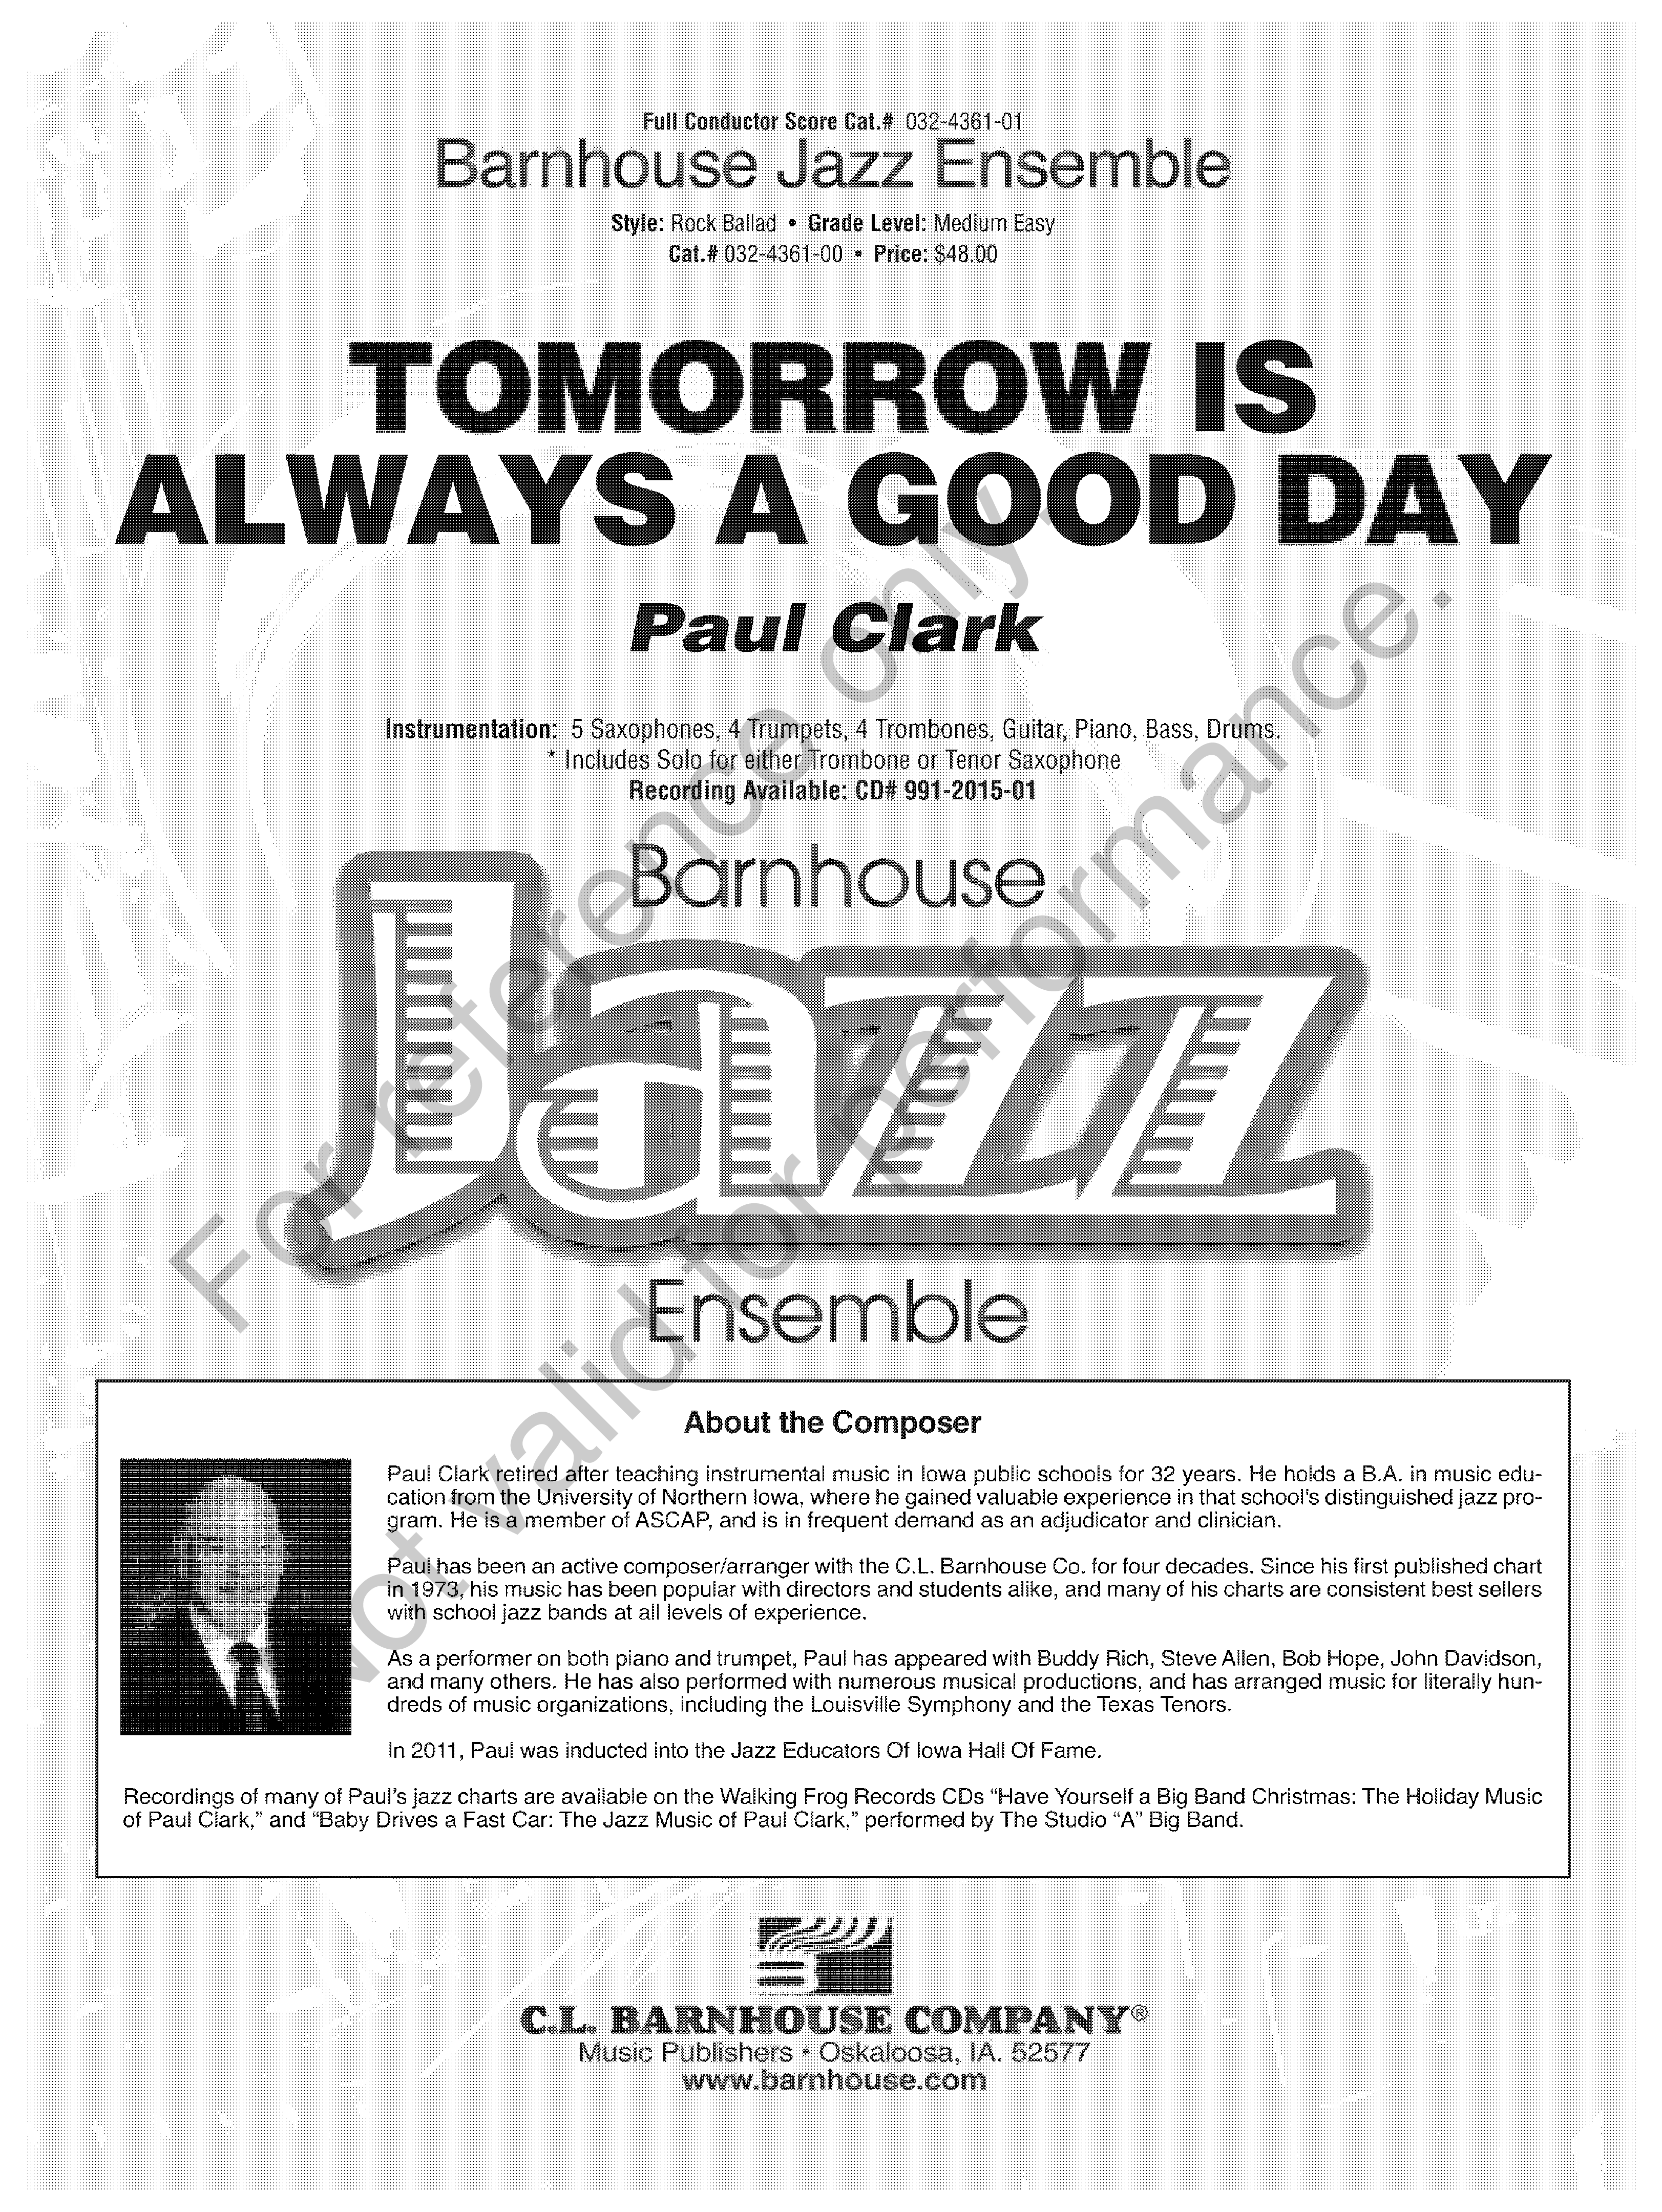 Tomorrow Is Always a Good Day